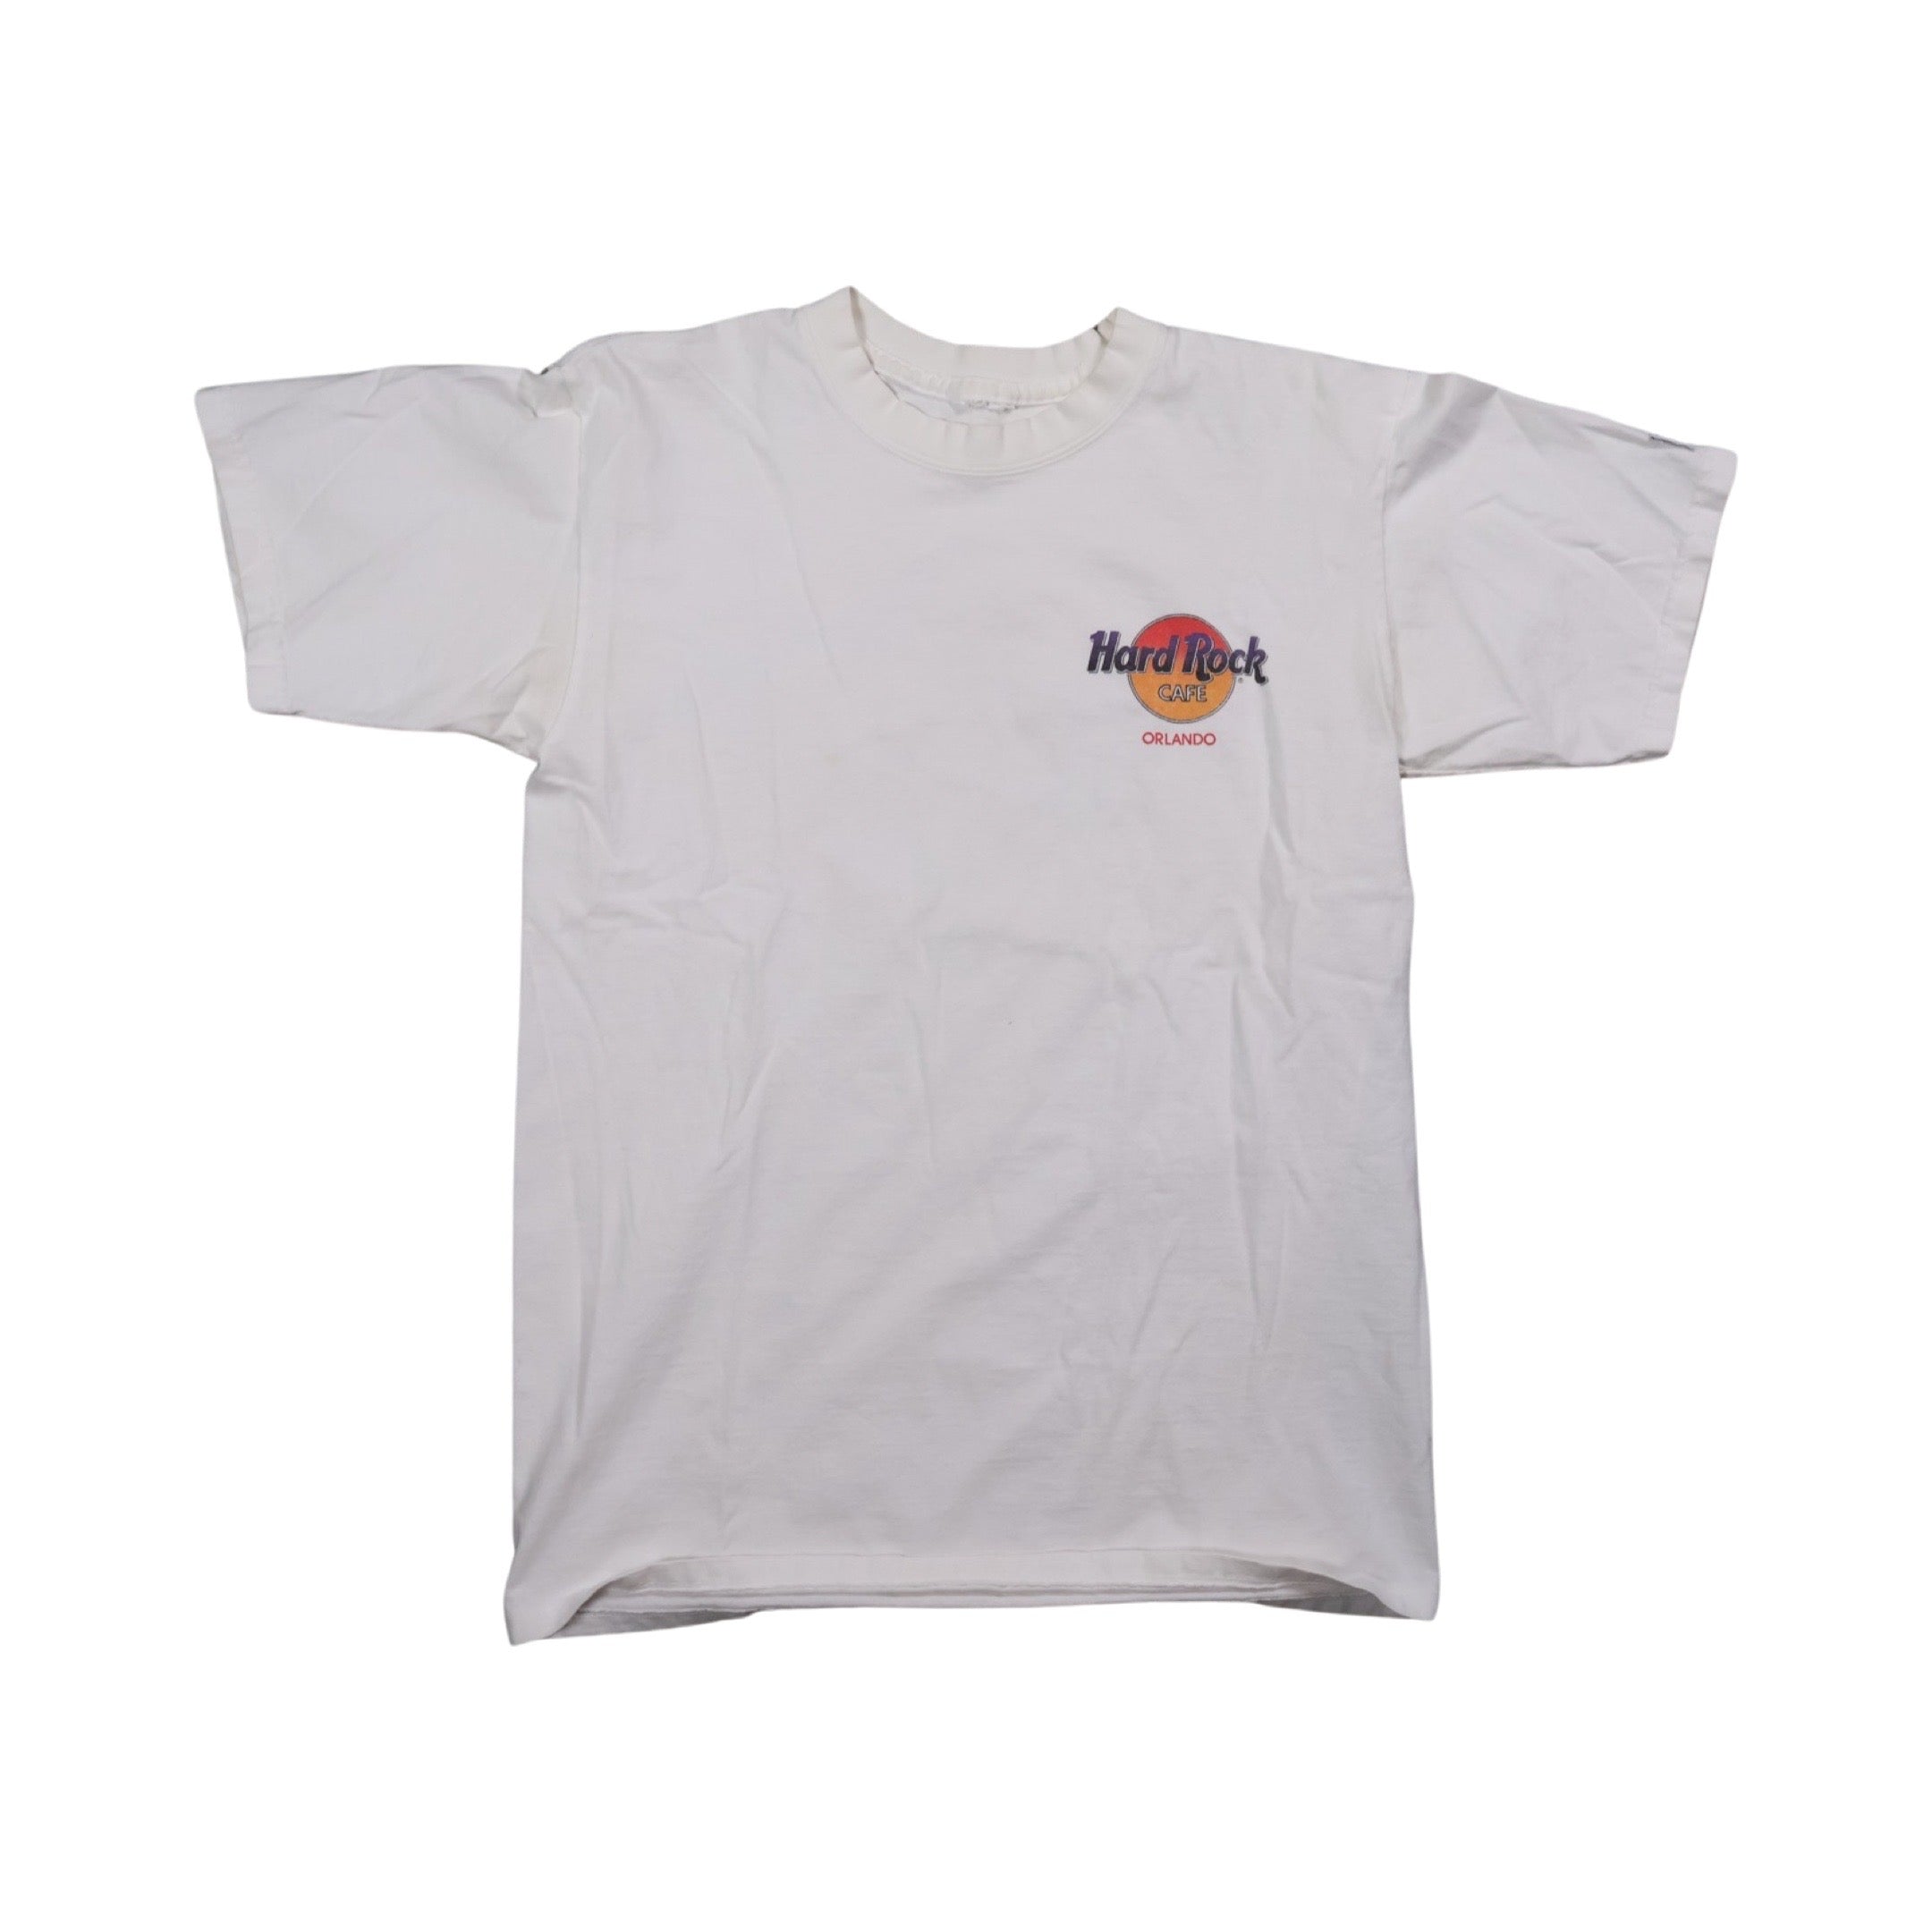 Hard Rock Cafe Orlando 90s T-Shirt (Medium)